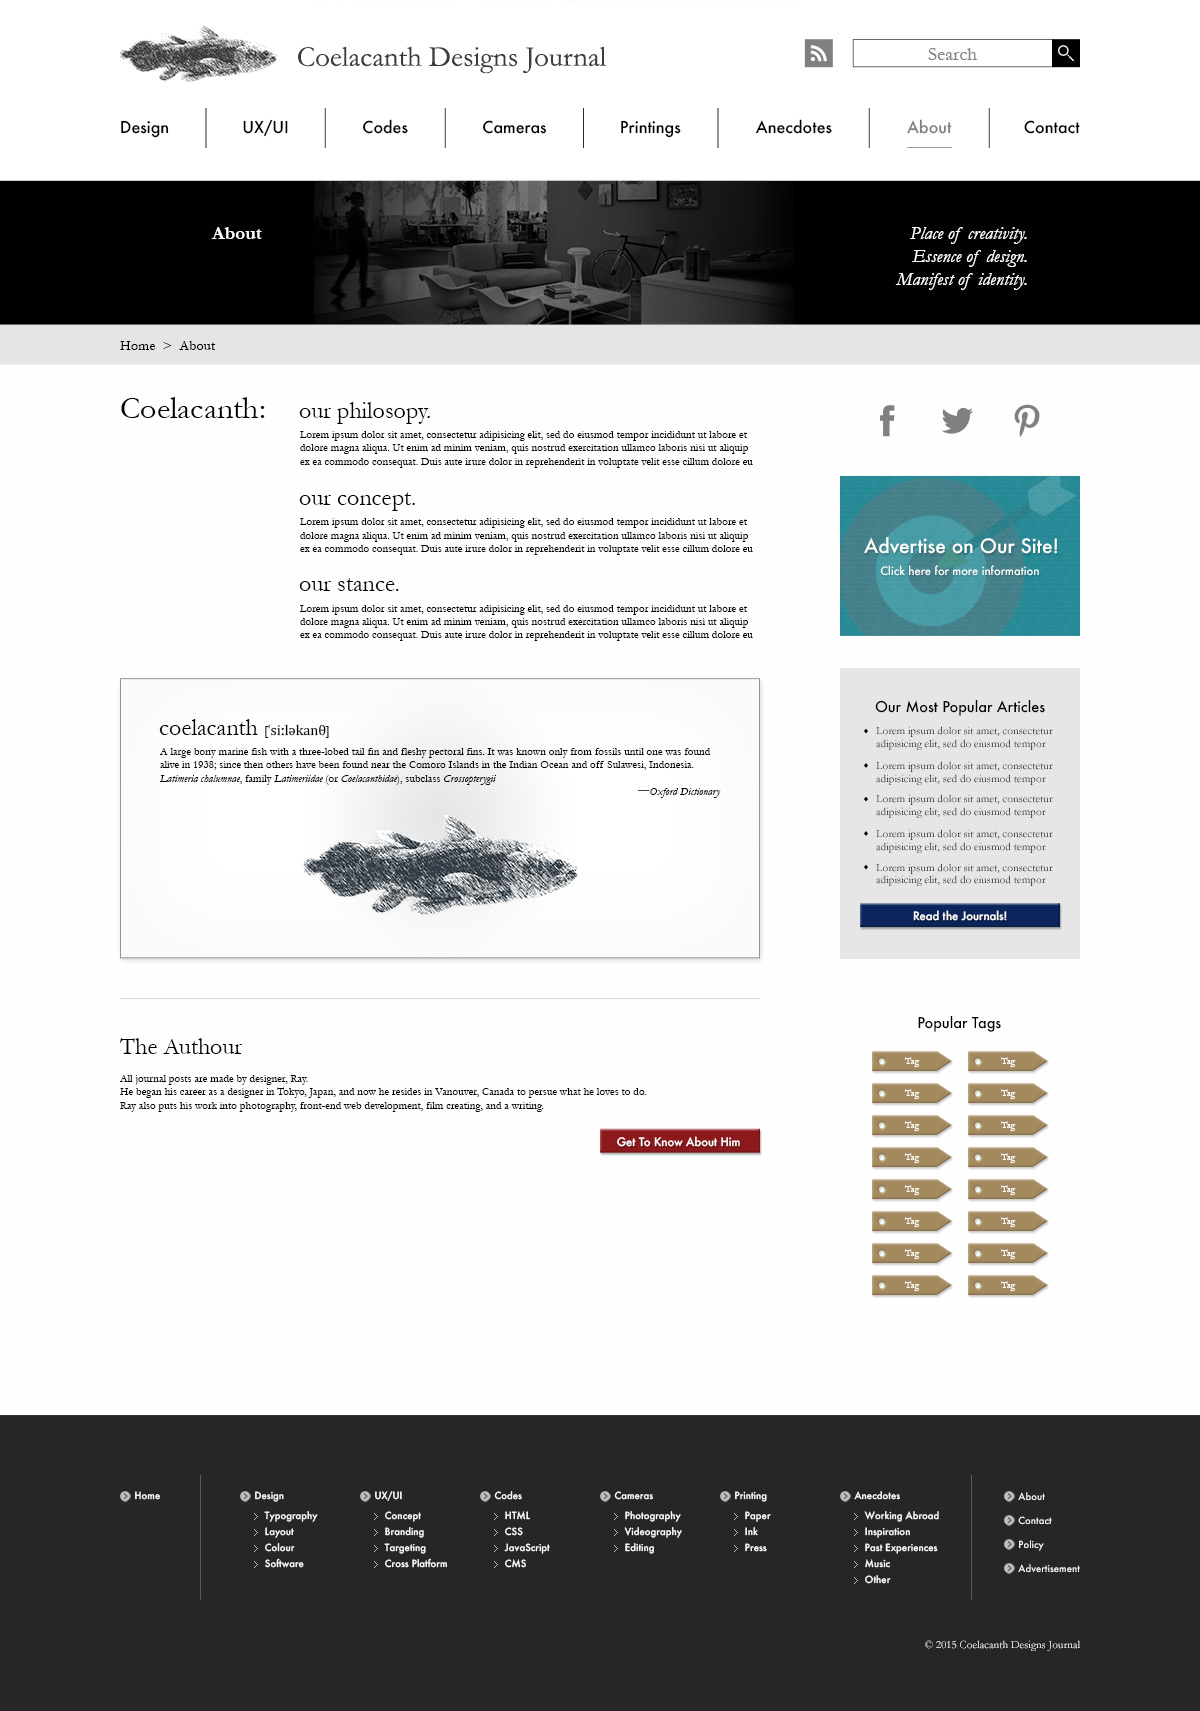 Coelacanth Designs Journal Website Design Mockup About